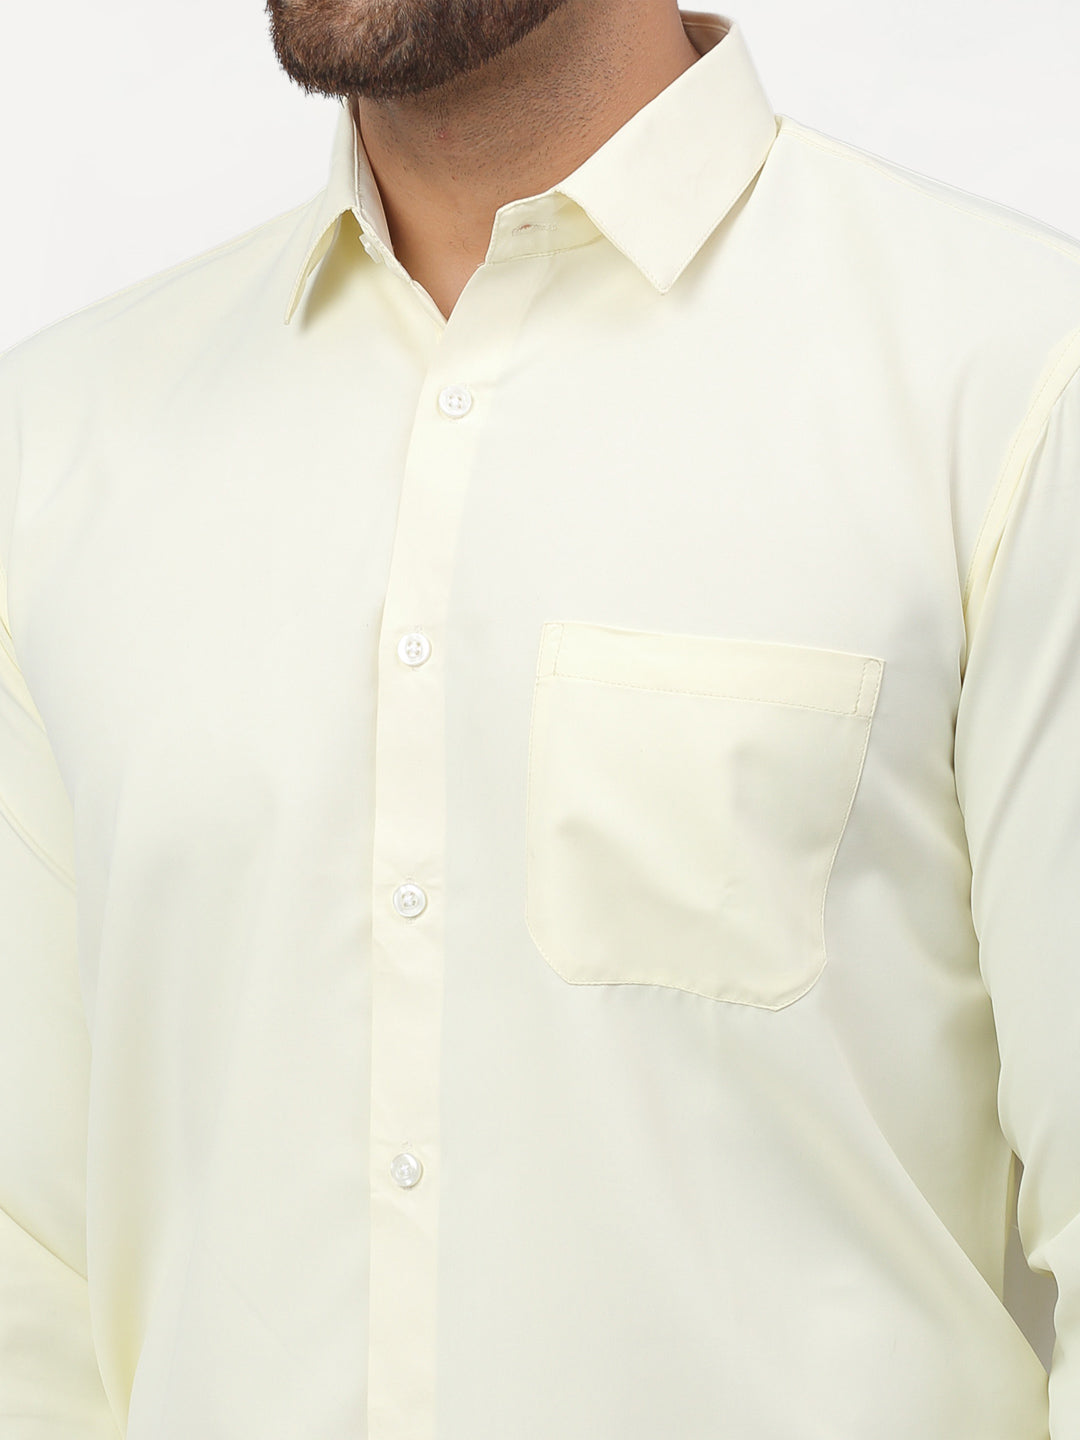 Jainish Yellow Men's Solid Formal Shirts